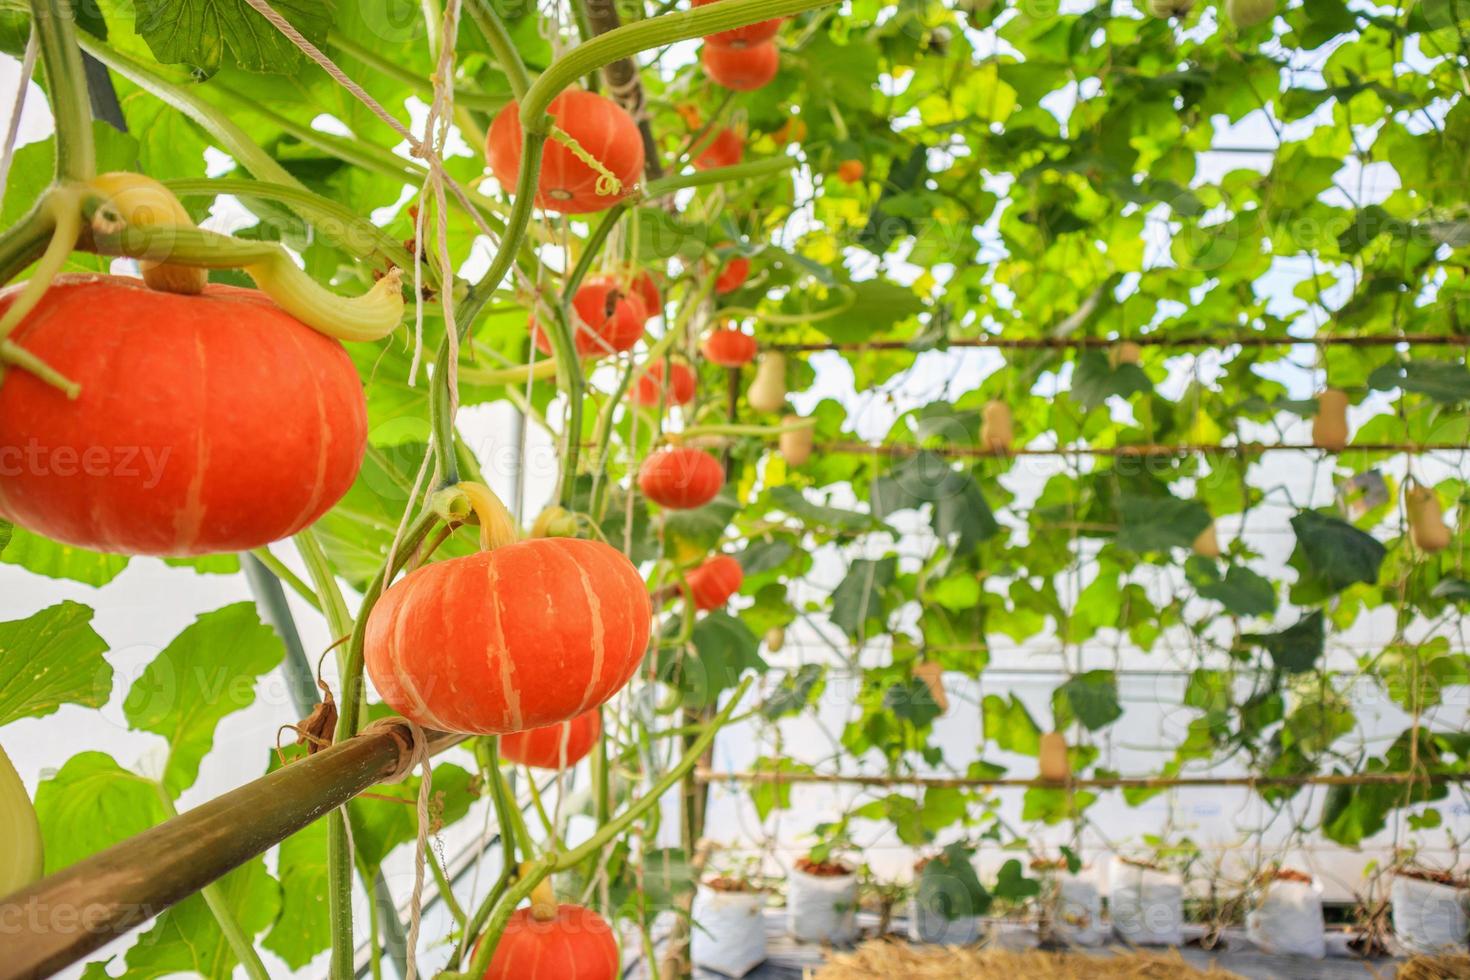 abóboras de laranja frescas crescendo no jardim de estufa orgânica foto